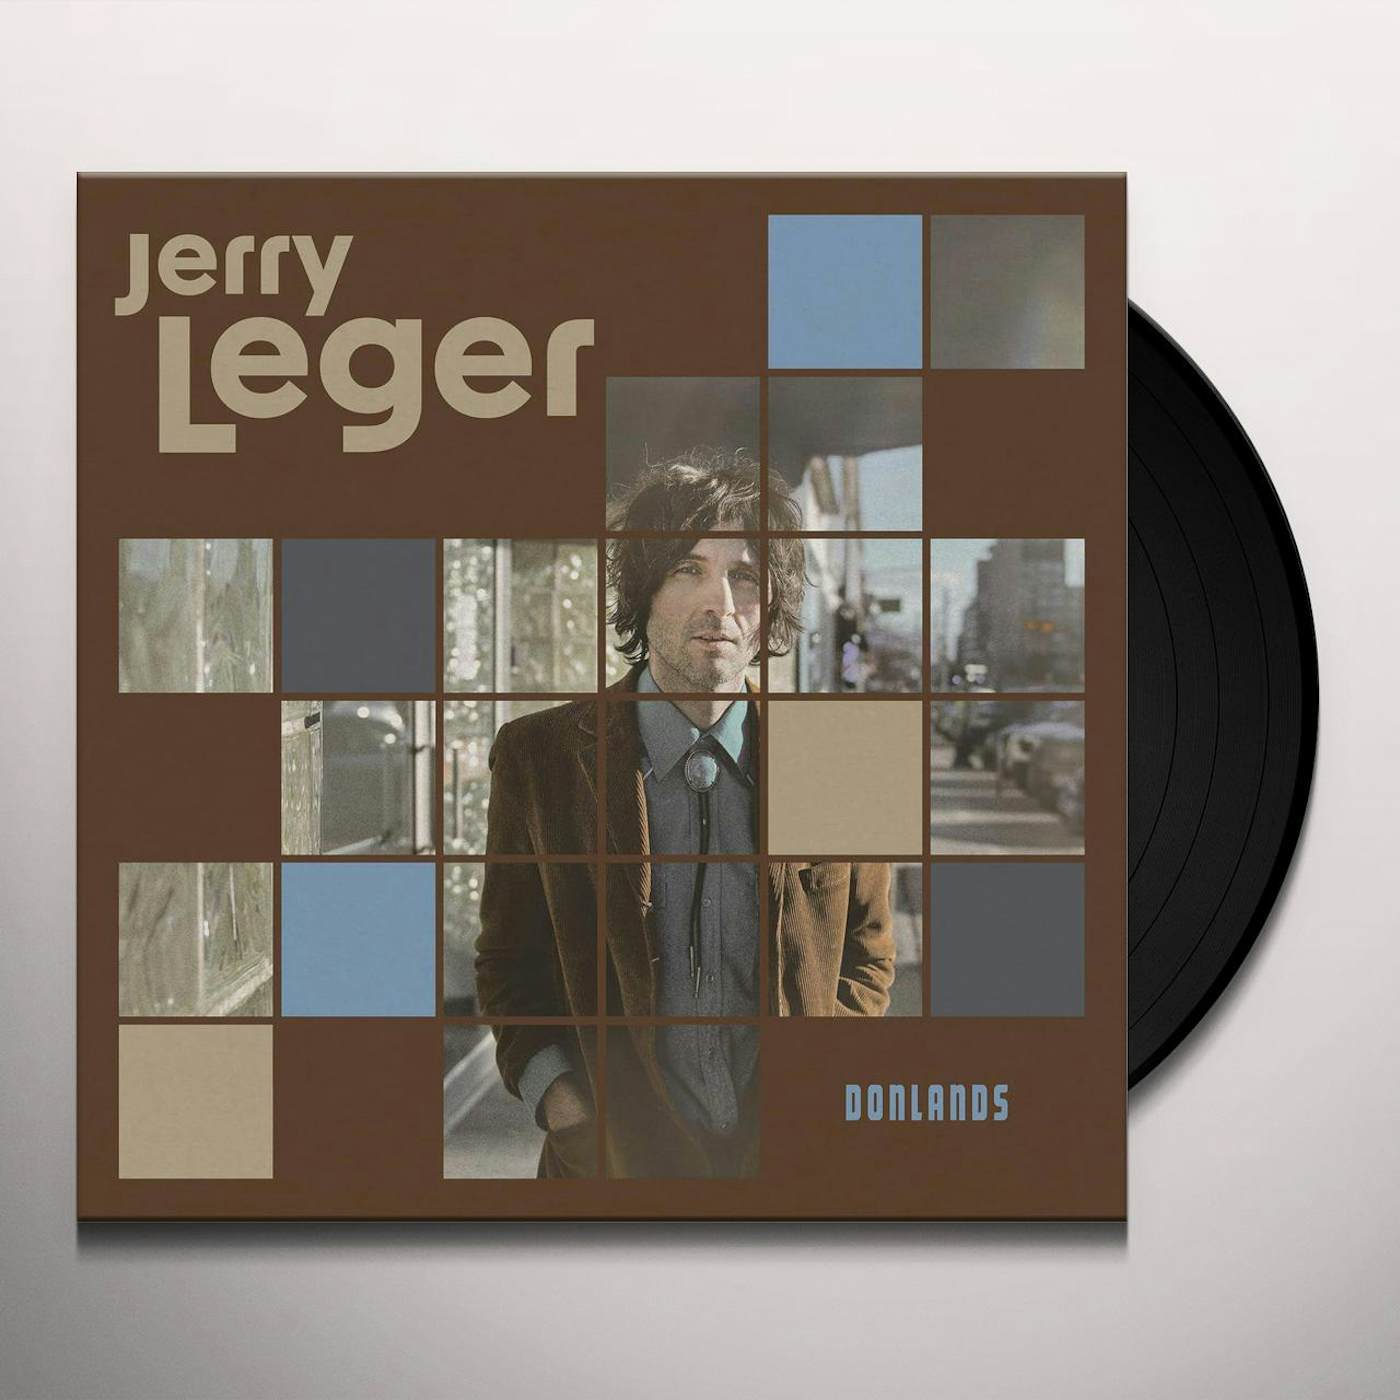 Jerry Leger Donlands Vinyl Record